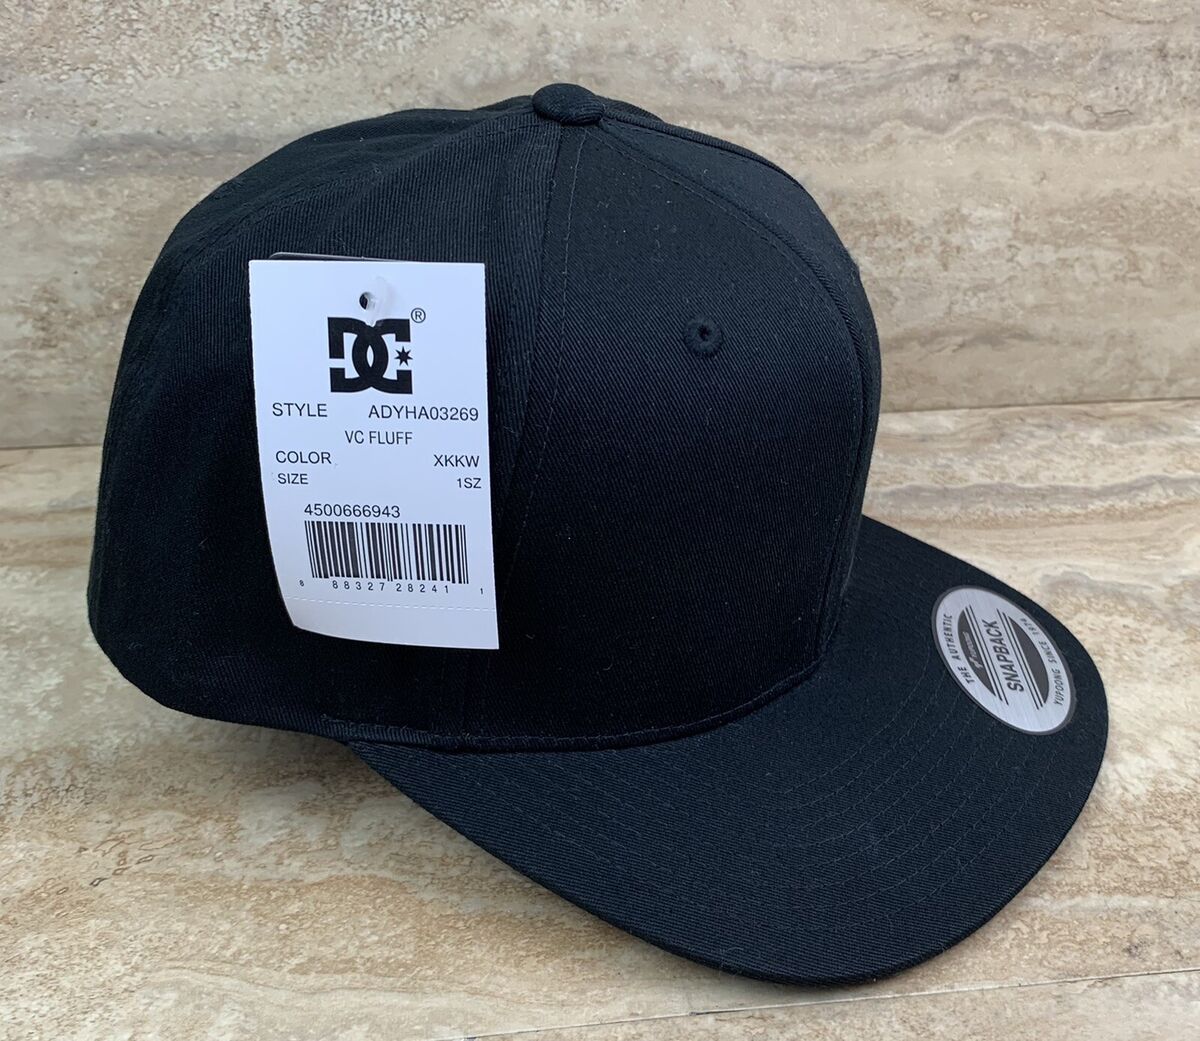 DC SHOES Sports Skate Apparel Snapback Hat Black White Adjustable Cap | eBay